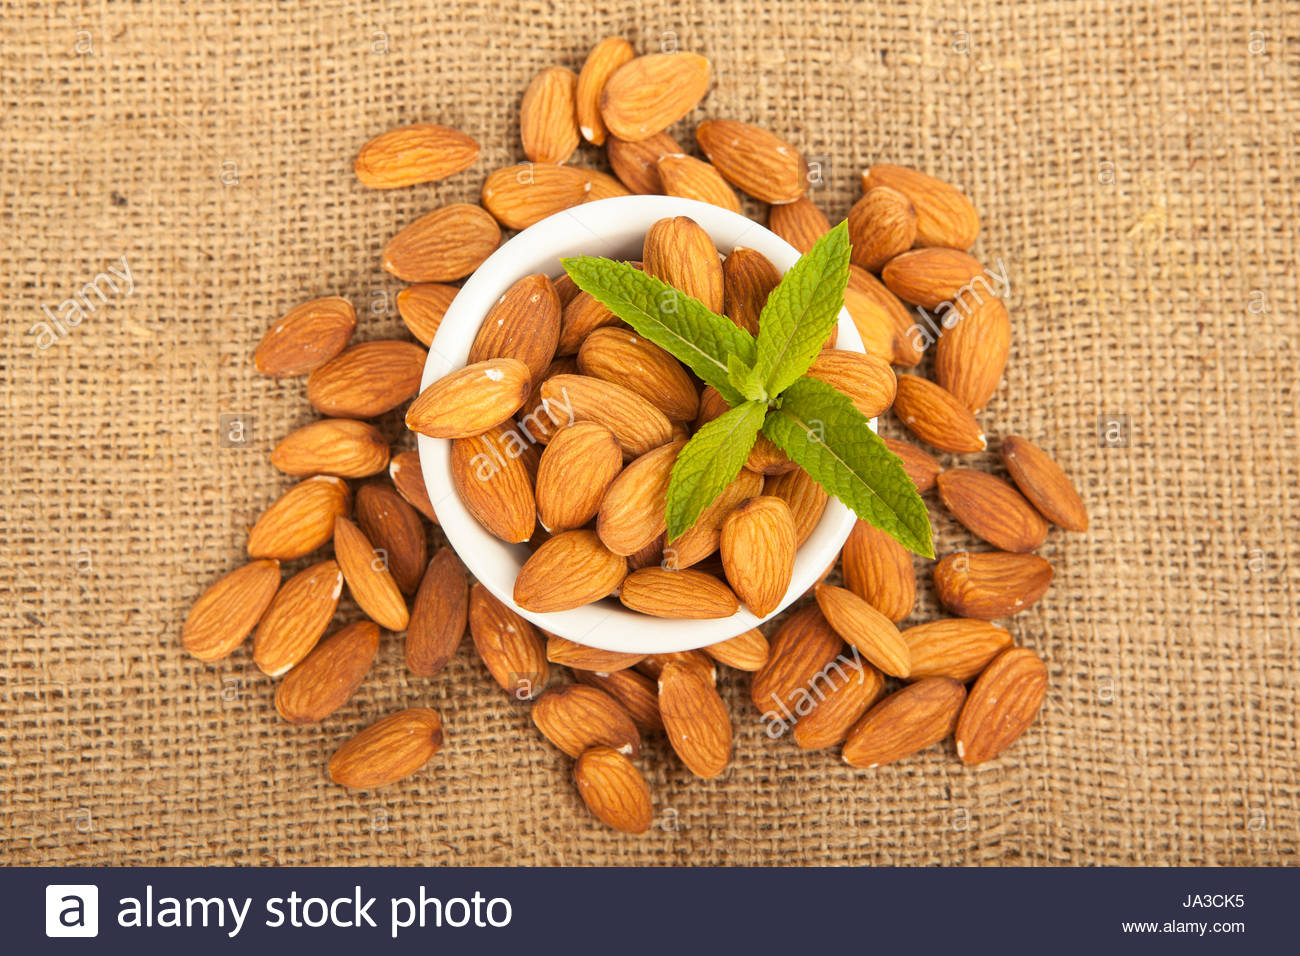 manu almonds in white ceramic bowl on sack background Stock Photo